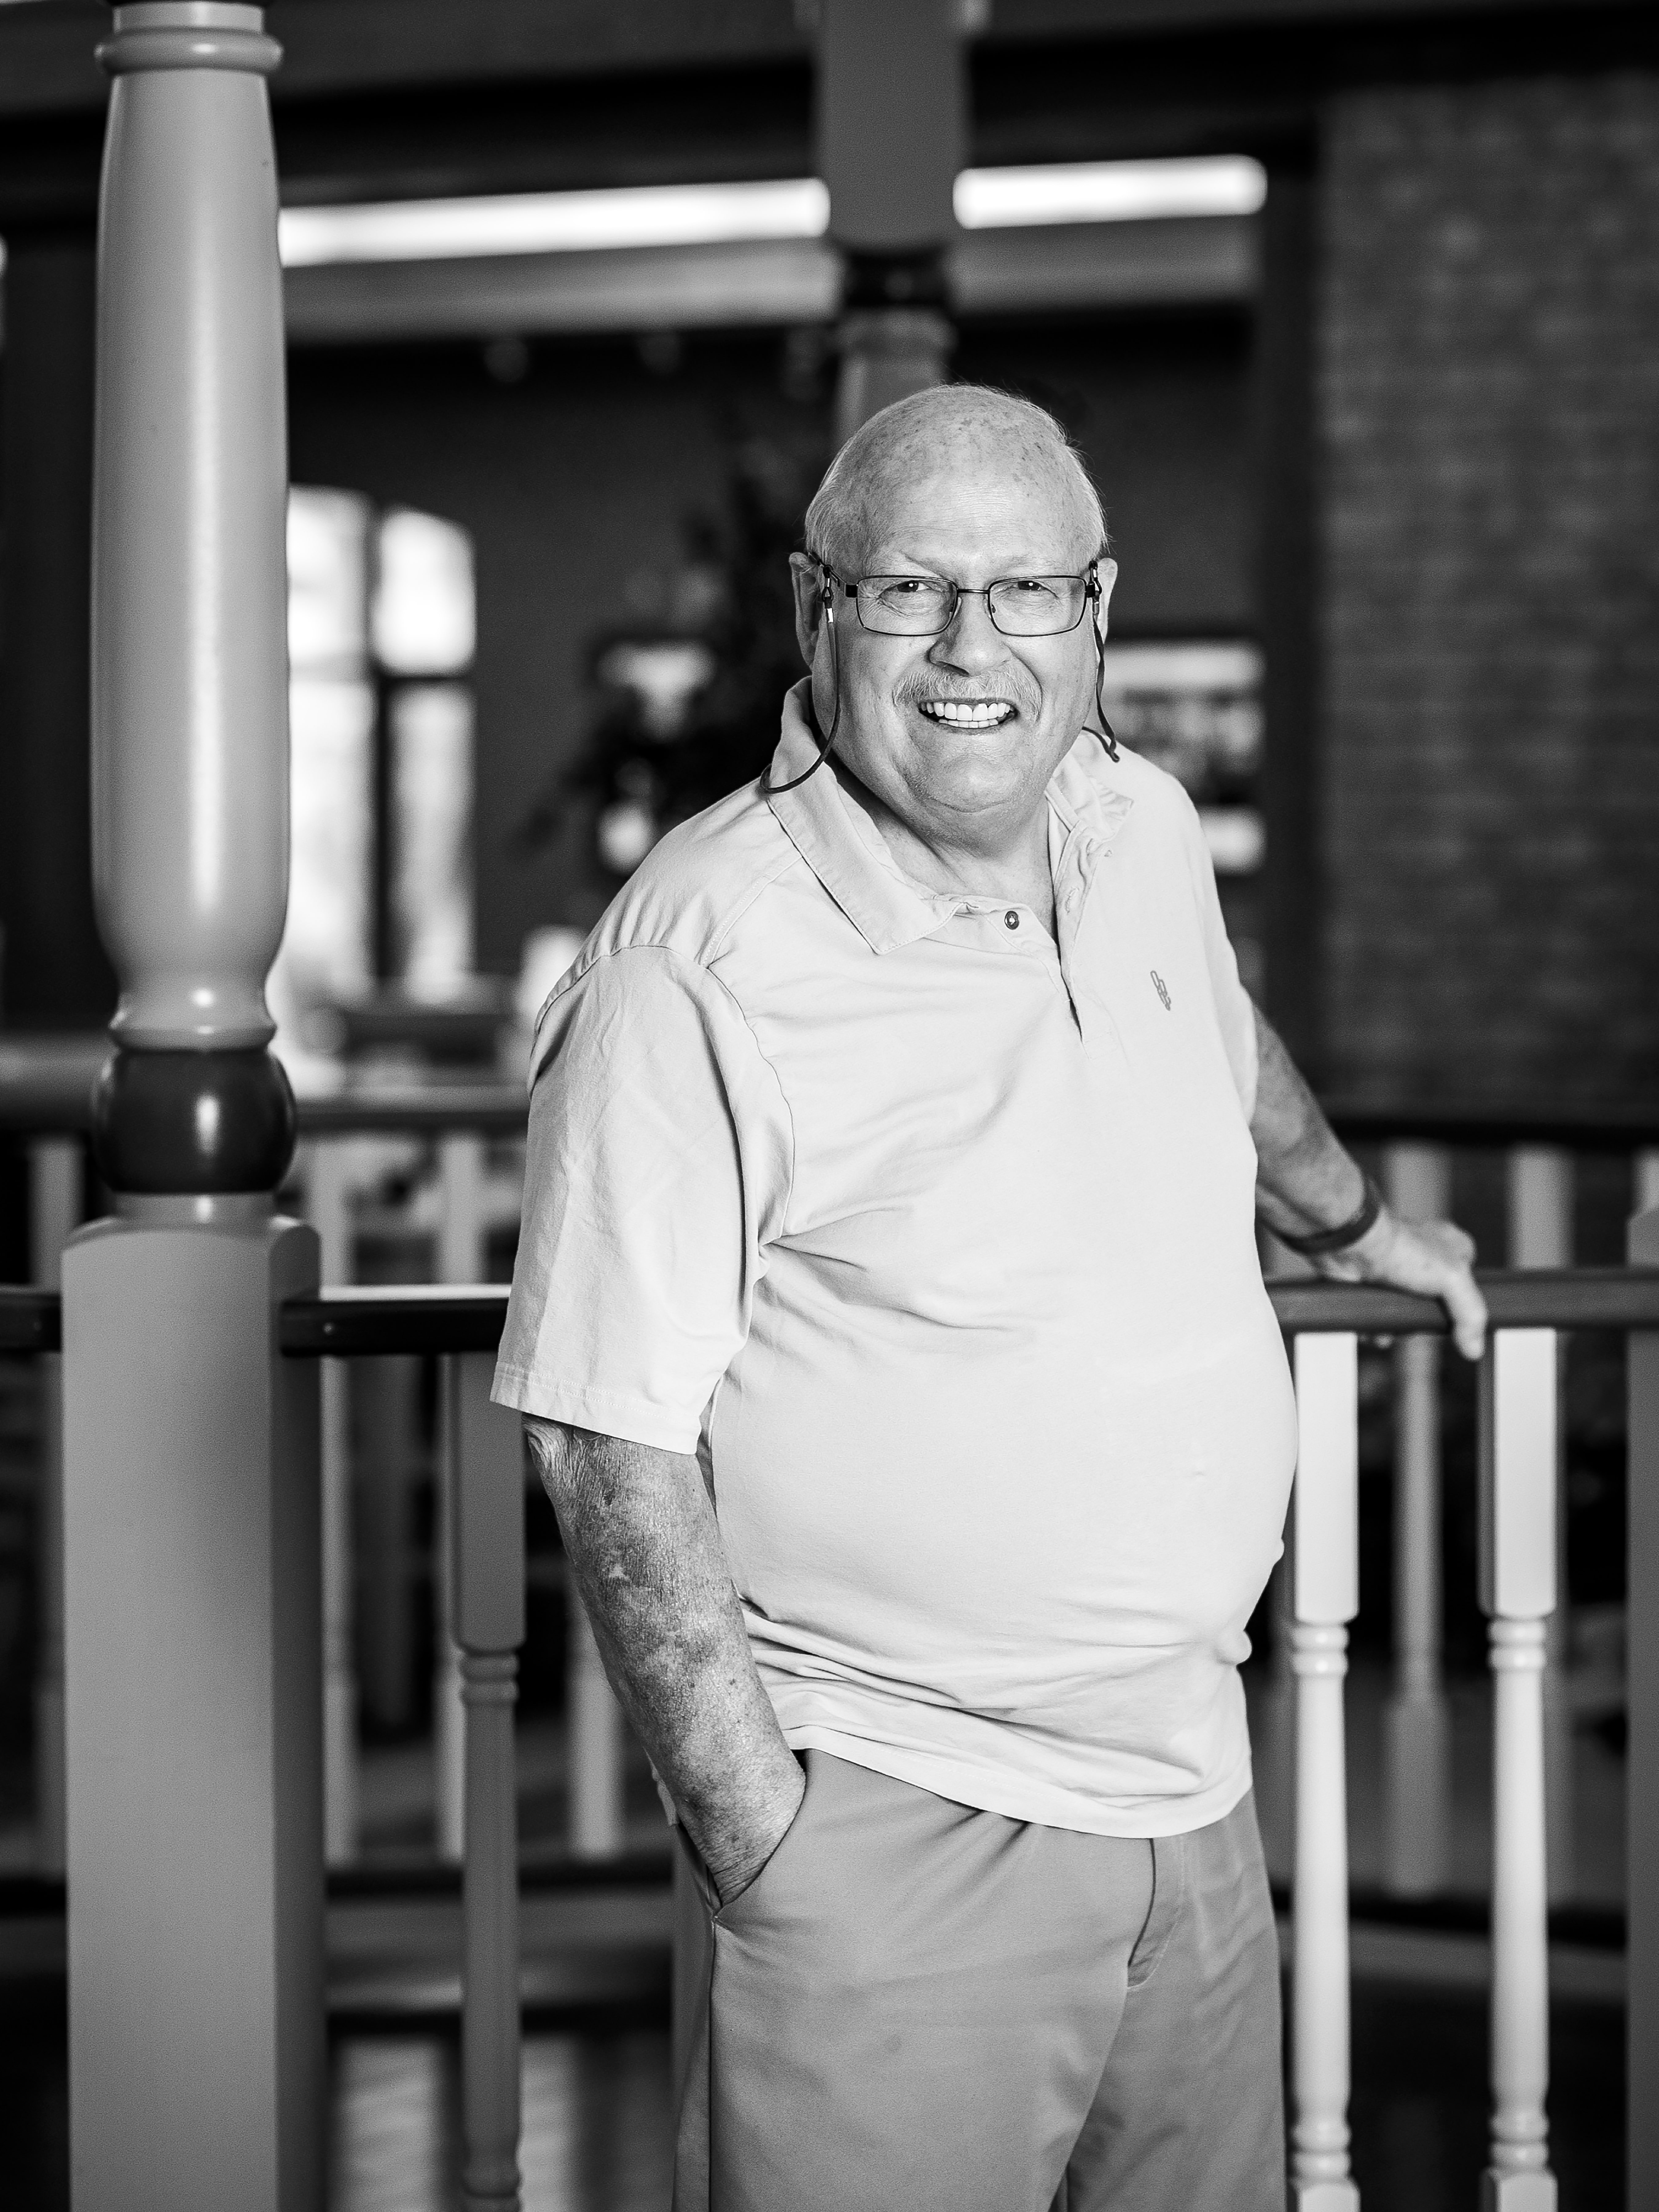 Ron Schlegel black and white portrait showcasing his passion for building communities